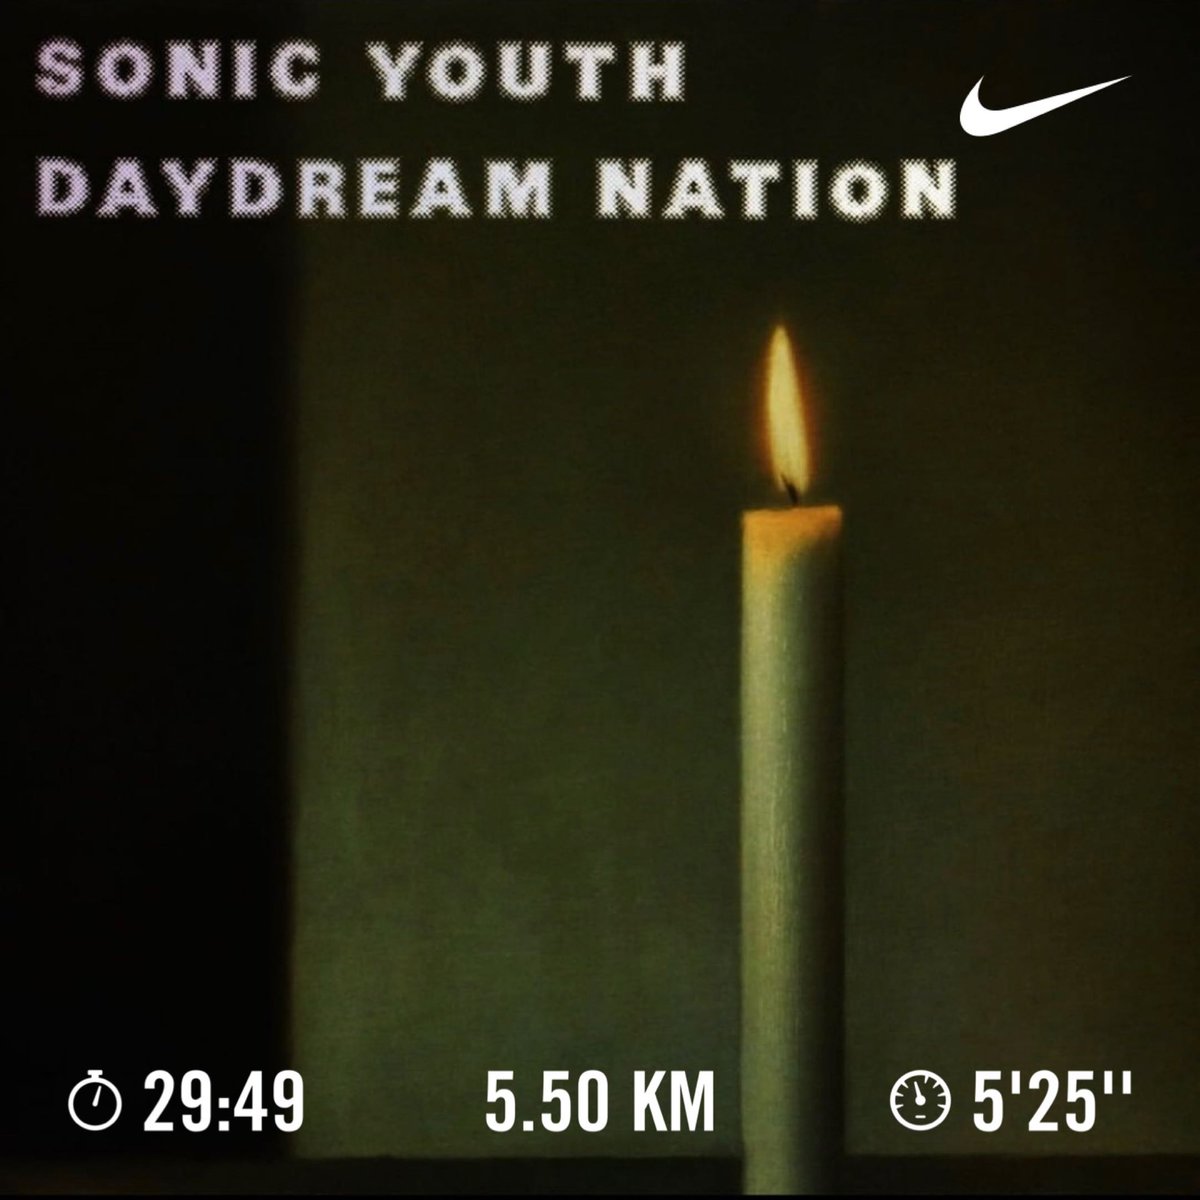 DAYDREAM NATION // Sonic Youth // 18 • 10 • 1988

#DaydreamNation #SonicYouth #Rock #Alternative #Running #NikeRunning #NRC #ComeRunWithUs #JustDoIt #RunWithMusic #AlbumOfTheDay #DaydreamNation35